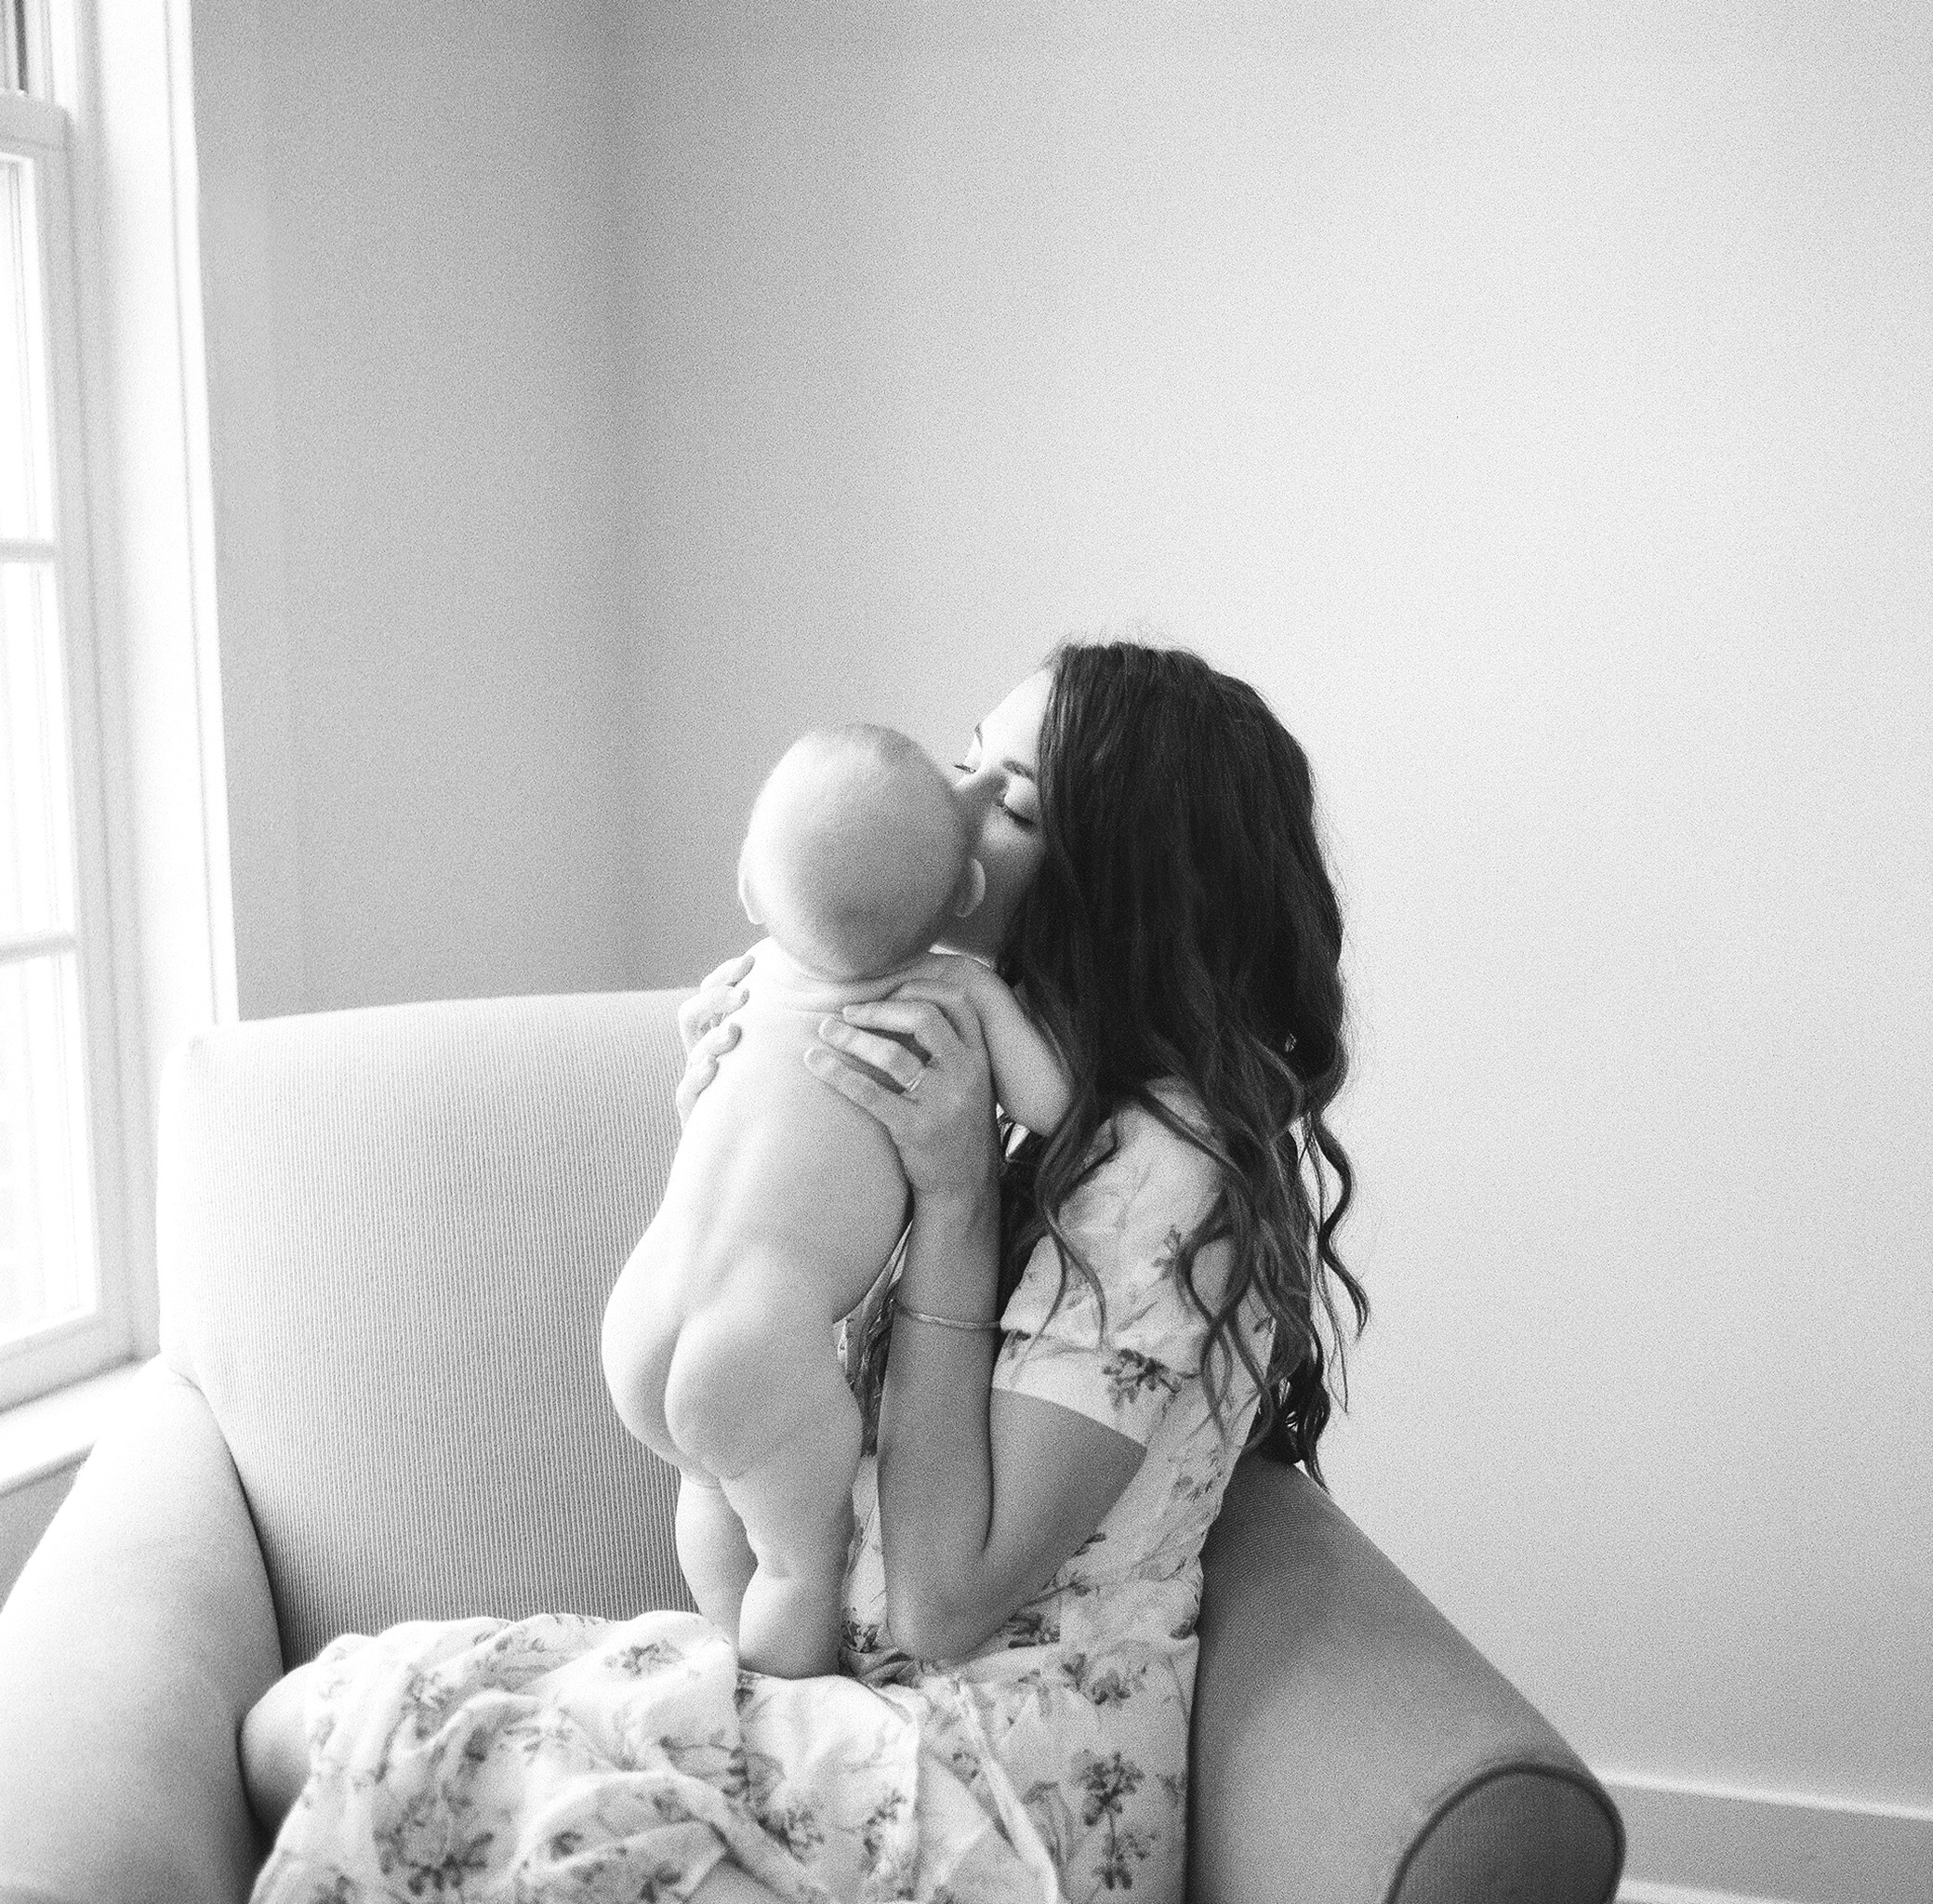 Kennebunkport and Portland Maine Baby Photographer Tiffany Farley, http://tiffanyfarley.com